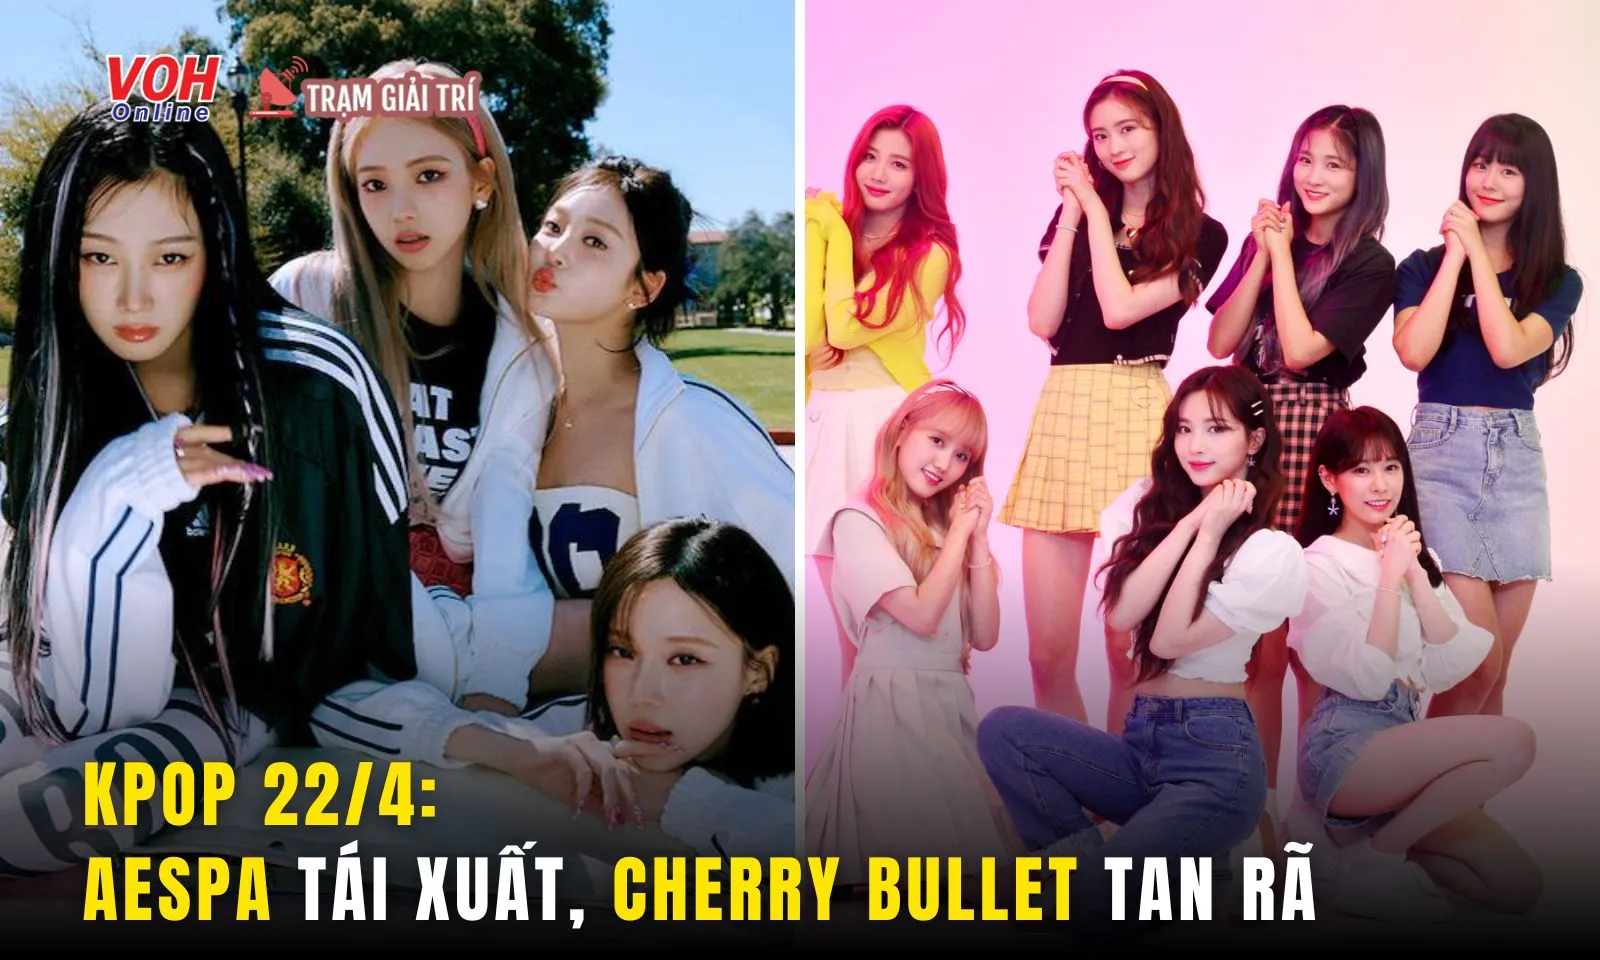 Bản tin Kpop 22/4: aespa comeback, Cherry Bullet tan rã sau 5 năm 